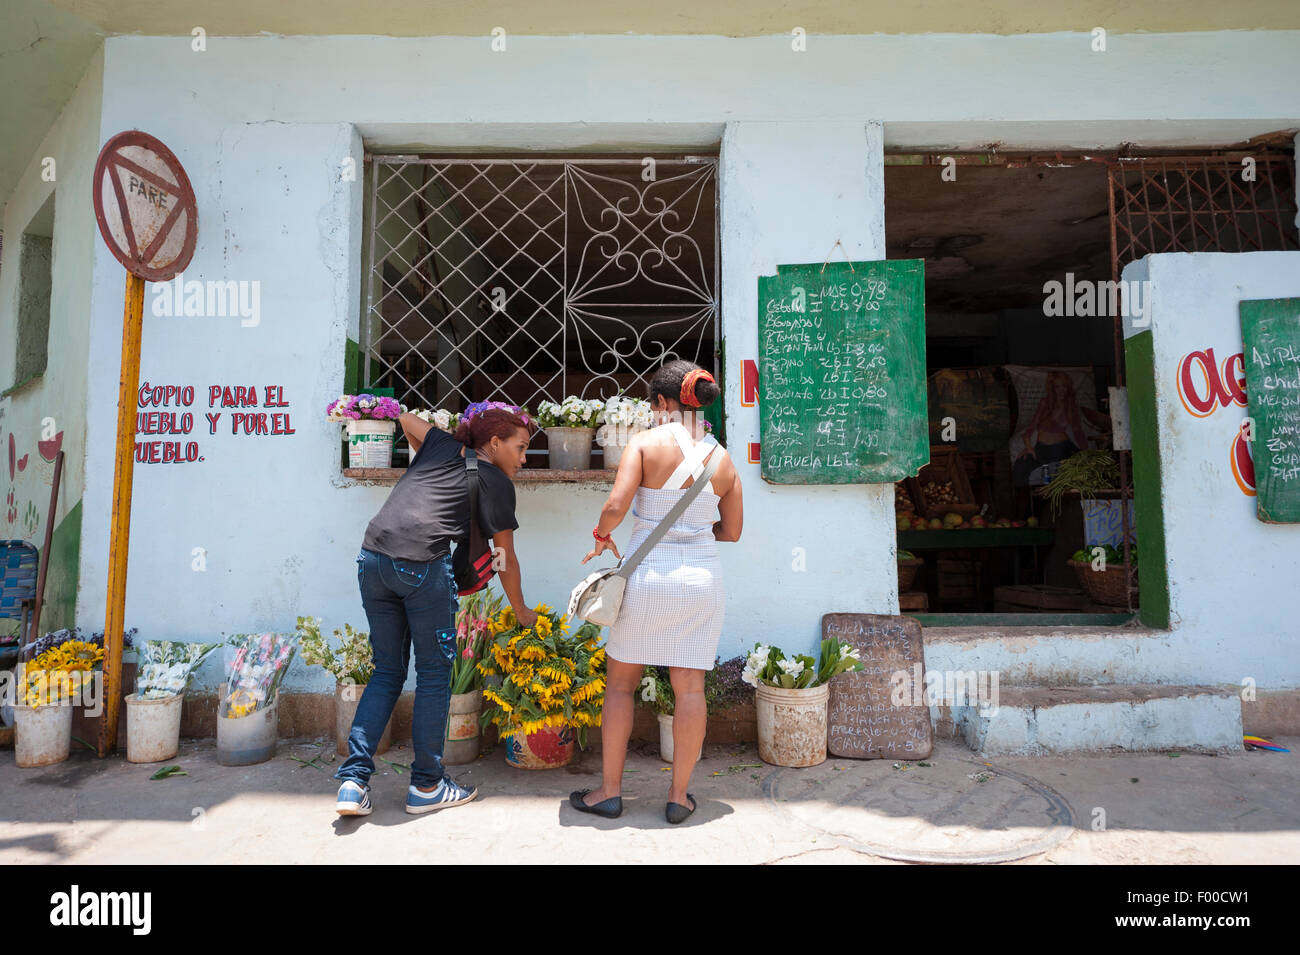 BACURANAO, Kuba - 6. Juni 2011: Kubaner Shop bei einem lokalen Lebensmittelgeschäft am Straßenrand mit Blumen und frische produce.cuba, kubanische, Stockfoto